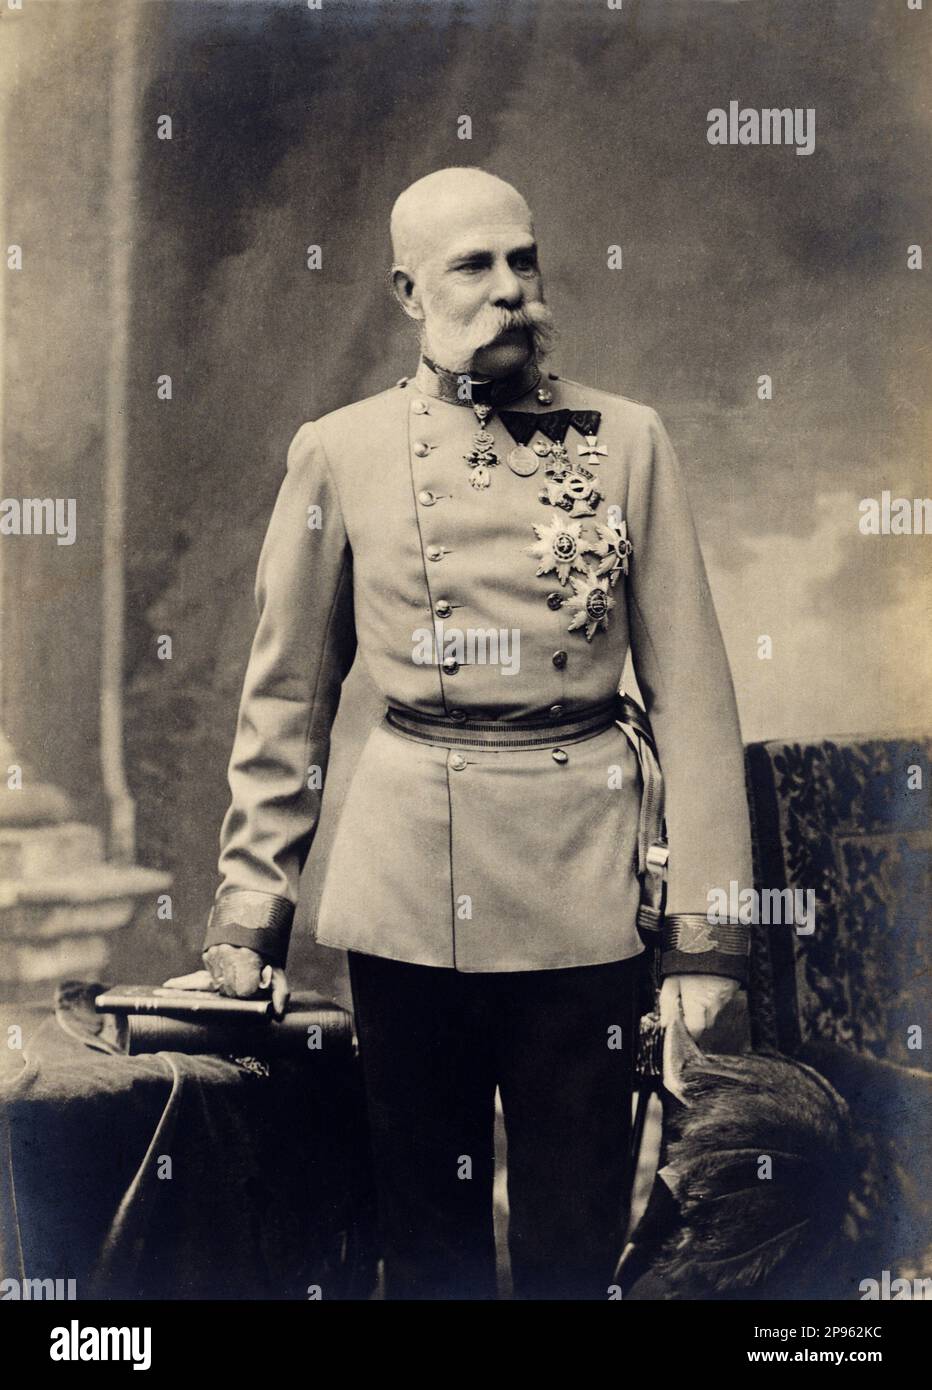 1900 c., Vienna , AUSTRIA : The austrian  Kaiser FRANZ JOSEF von ABSBURG Osterreich  ( 1830 - 1916 ) , Emperor of Austria , King of Hungary and Bohemia . - FRANCESCO GIUSEPPE - JOSEPH - ABSBURG - ASBURG - ASBURGO - NOBILITY - NOBILI -  Nobiltà - REALI - HABSBURG - HASBURG - ROYALTY - AUSTRIA - beard - barba  - baffi - moustache - military uniform - divisa uniforme militare  - Francesco Giuseppe - medails - medaglie   ----  Archivio GBB Stock Photo